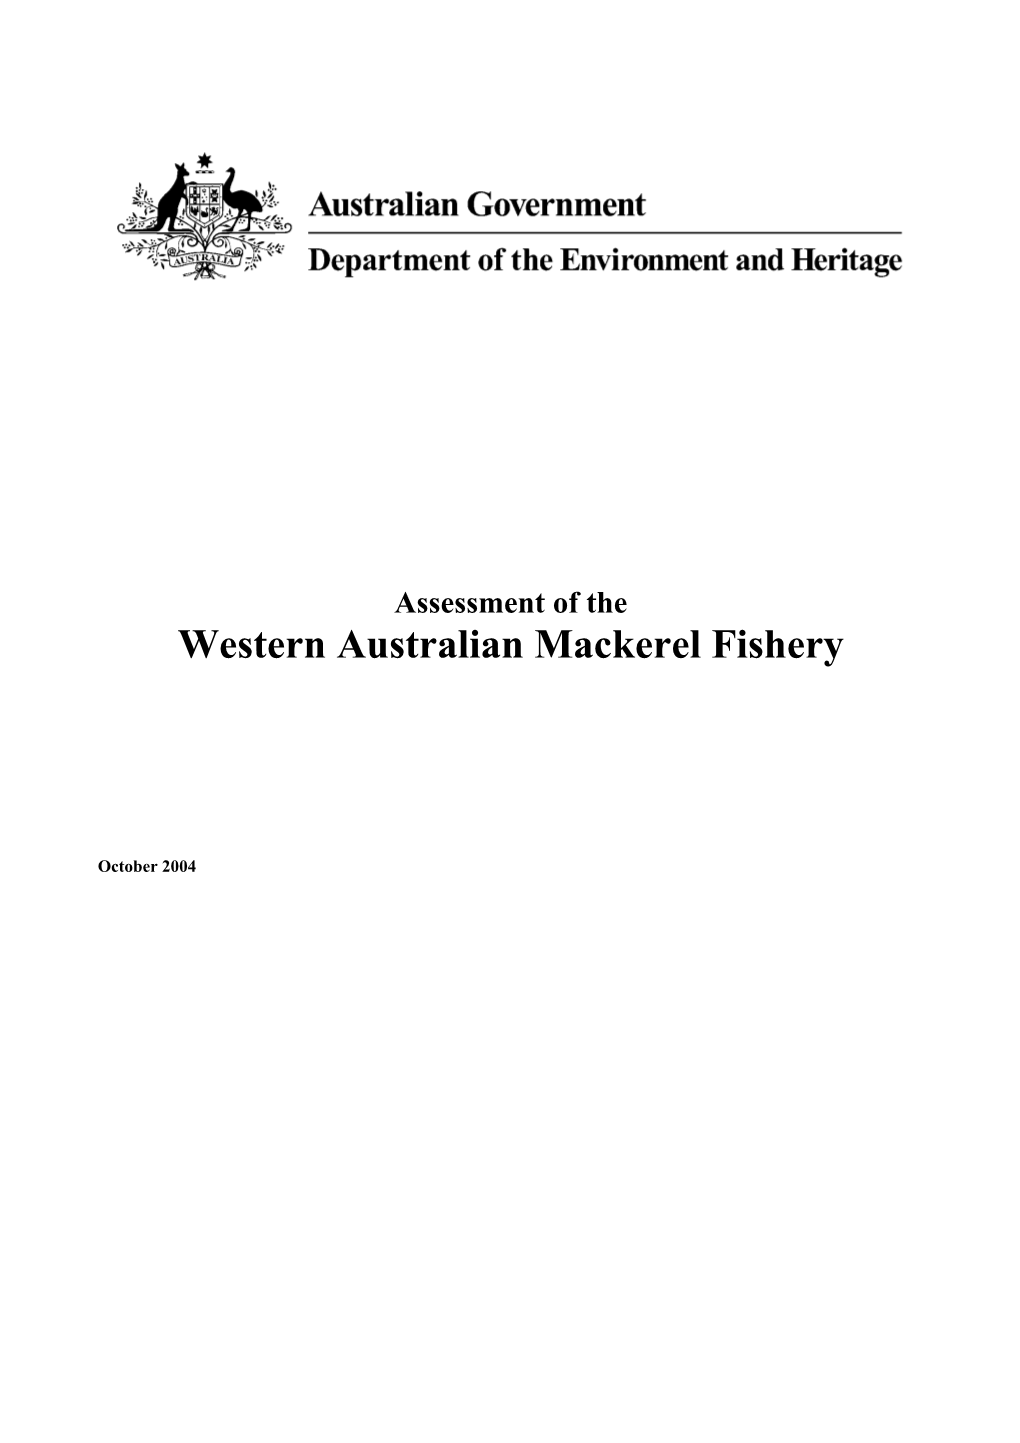 Assessment of the Western Australian Mackerel Fishery